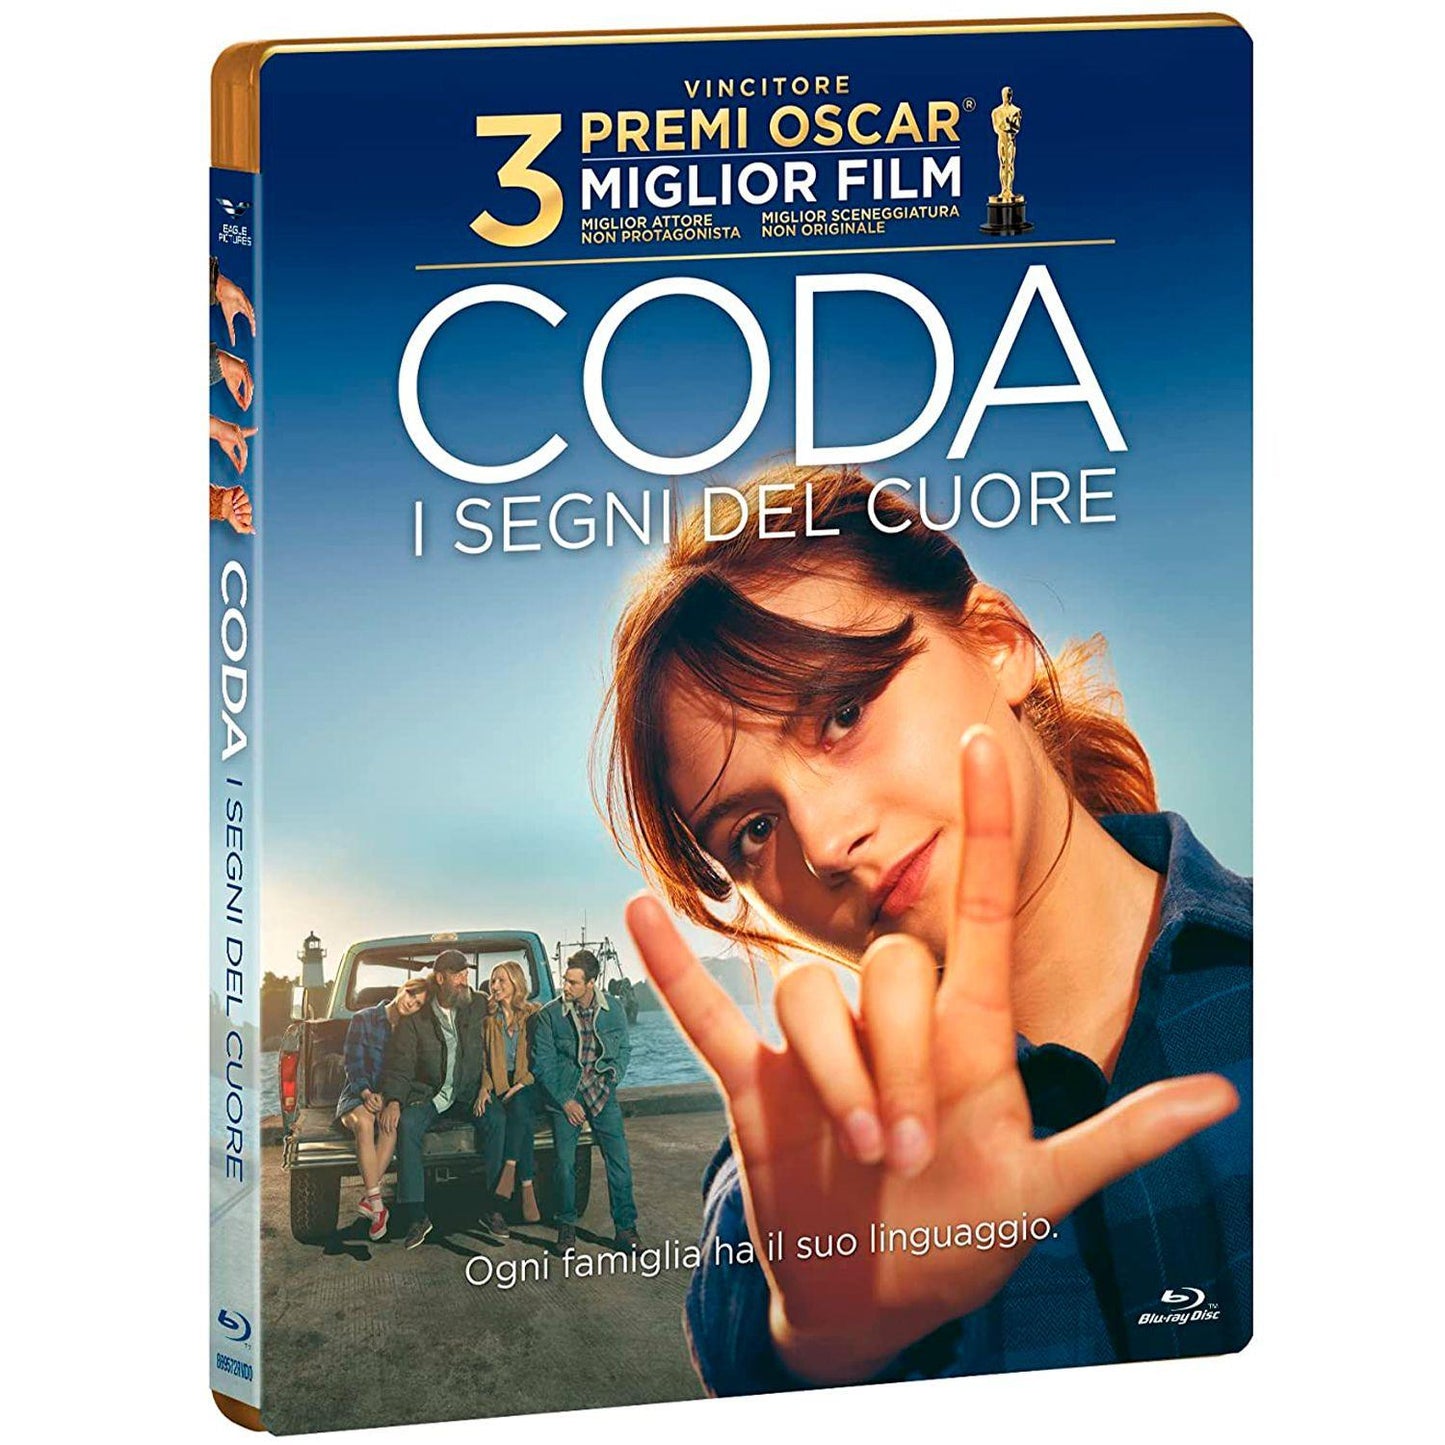 CODA: Ребенок глухих родителей (2021) (англ. язык) (Blu-ray)